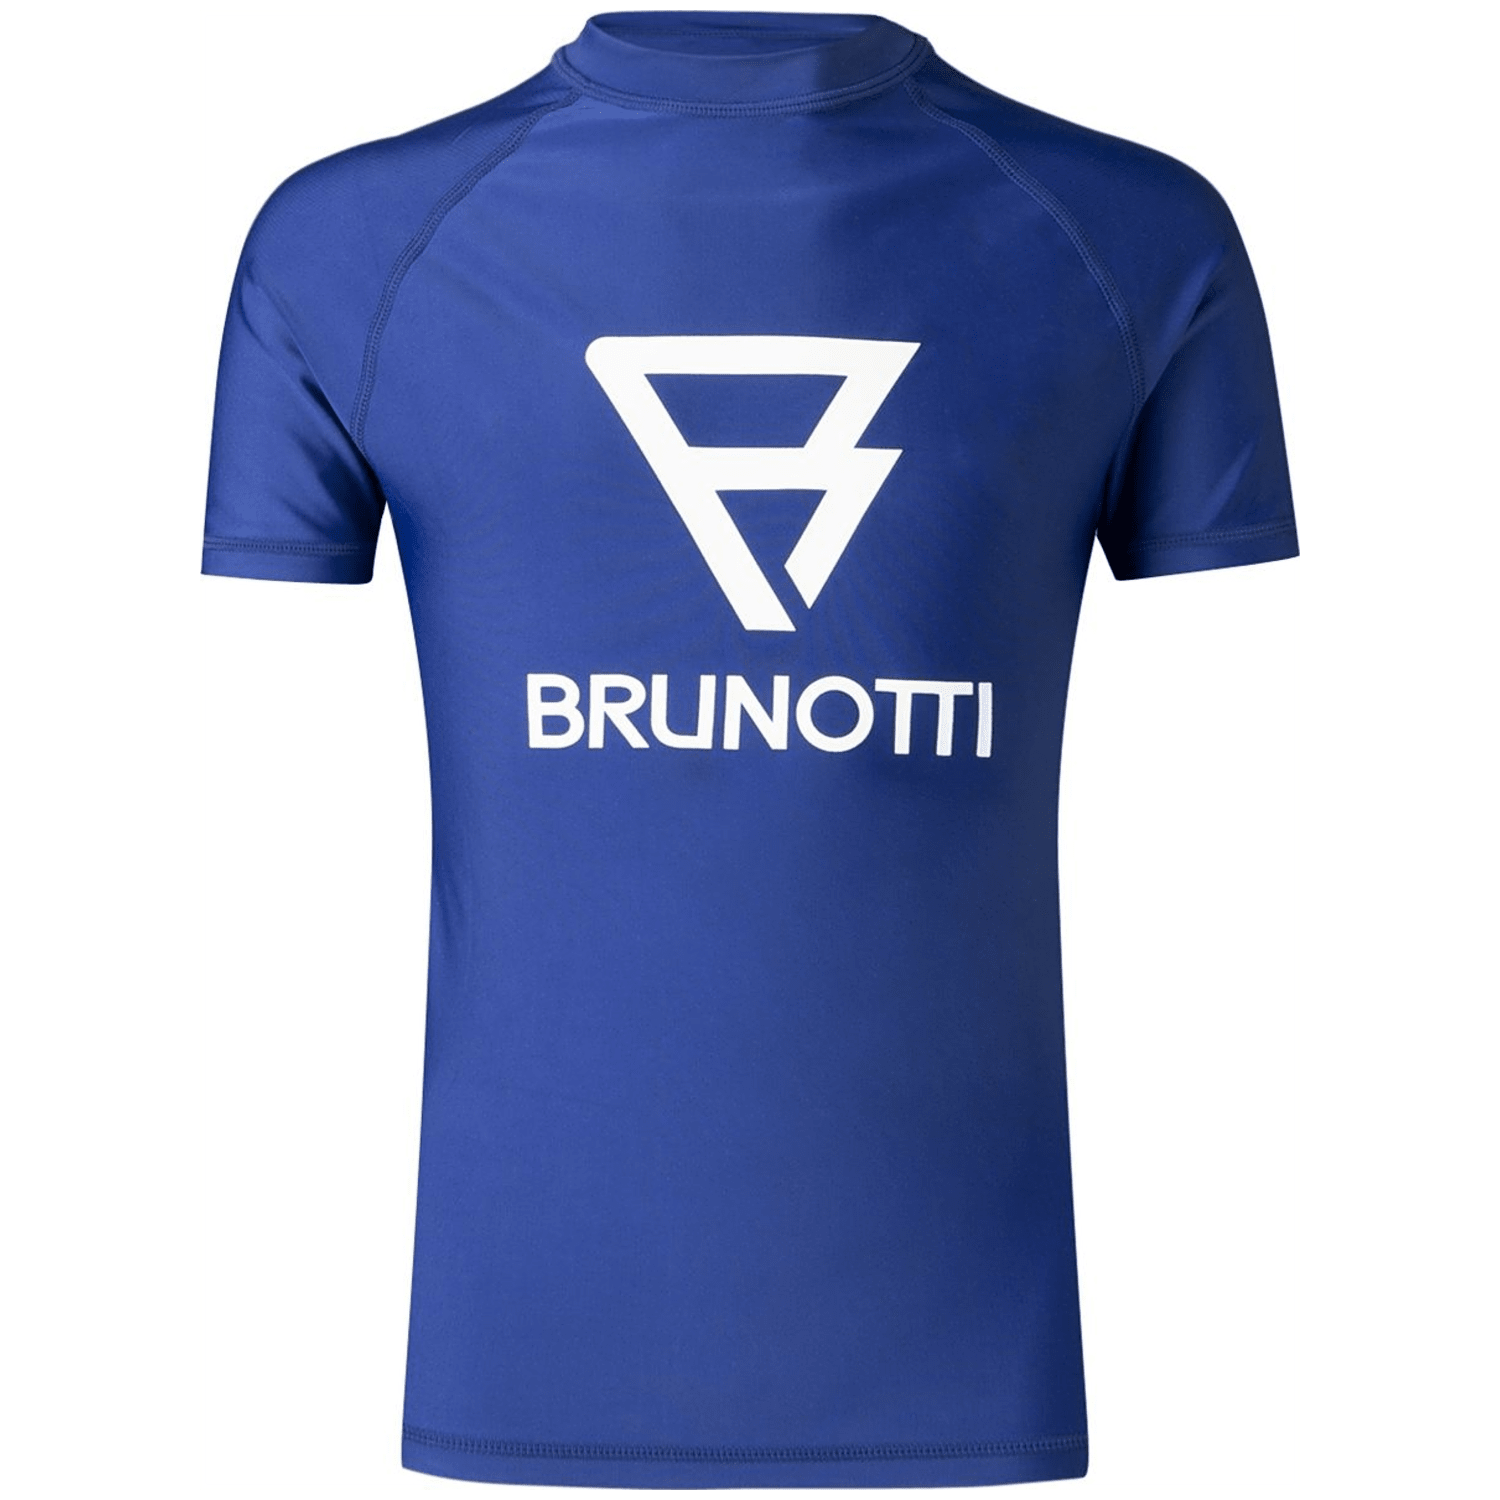 Brunotti Surfly Herren Shirt